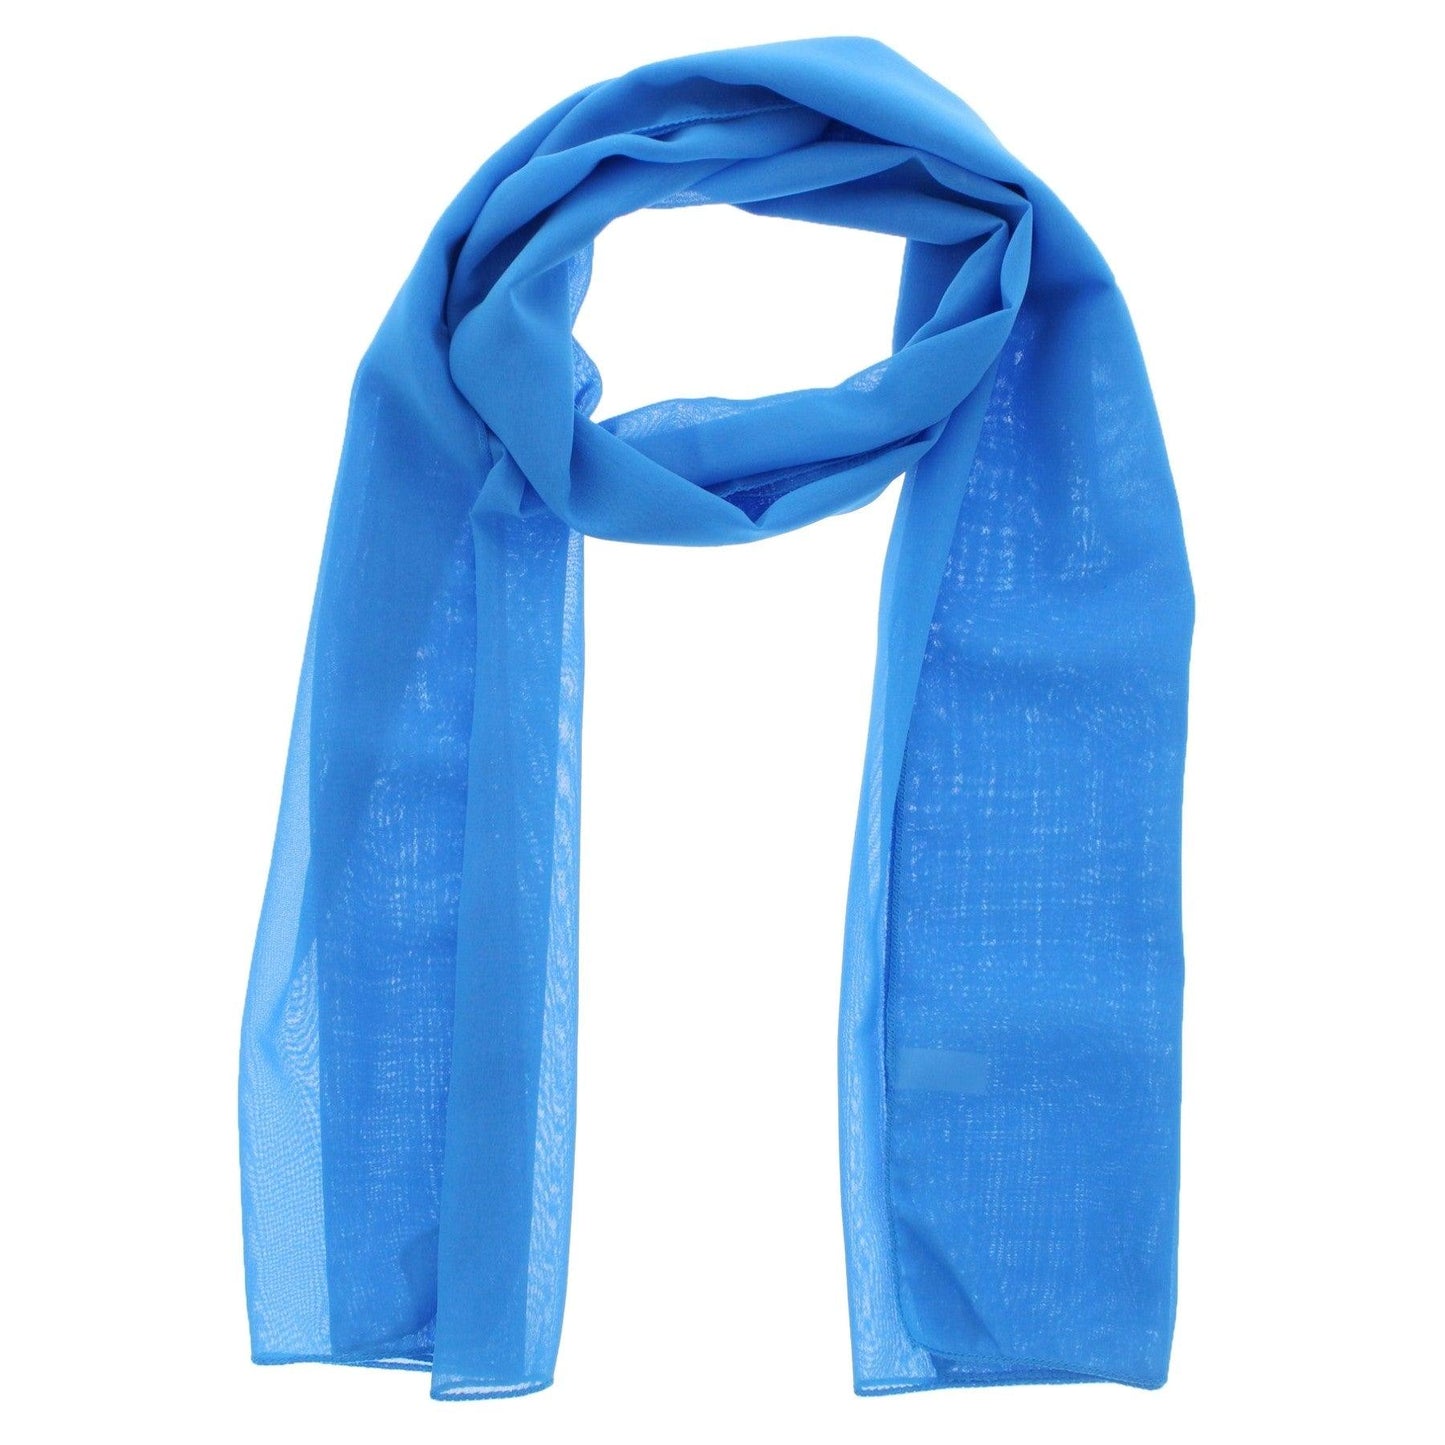 Chiffon scarf 150x 45 cm by WESTEND CHOICE Scarves & Shawls all scarves, boys, chiffon scarves, girls, kids, men, plain chiffon scarves, women